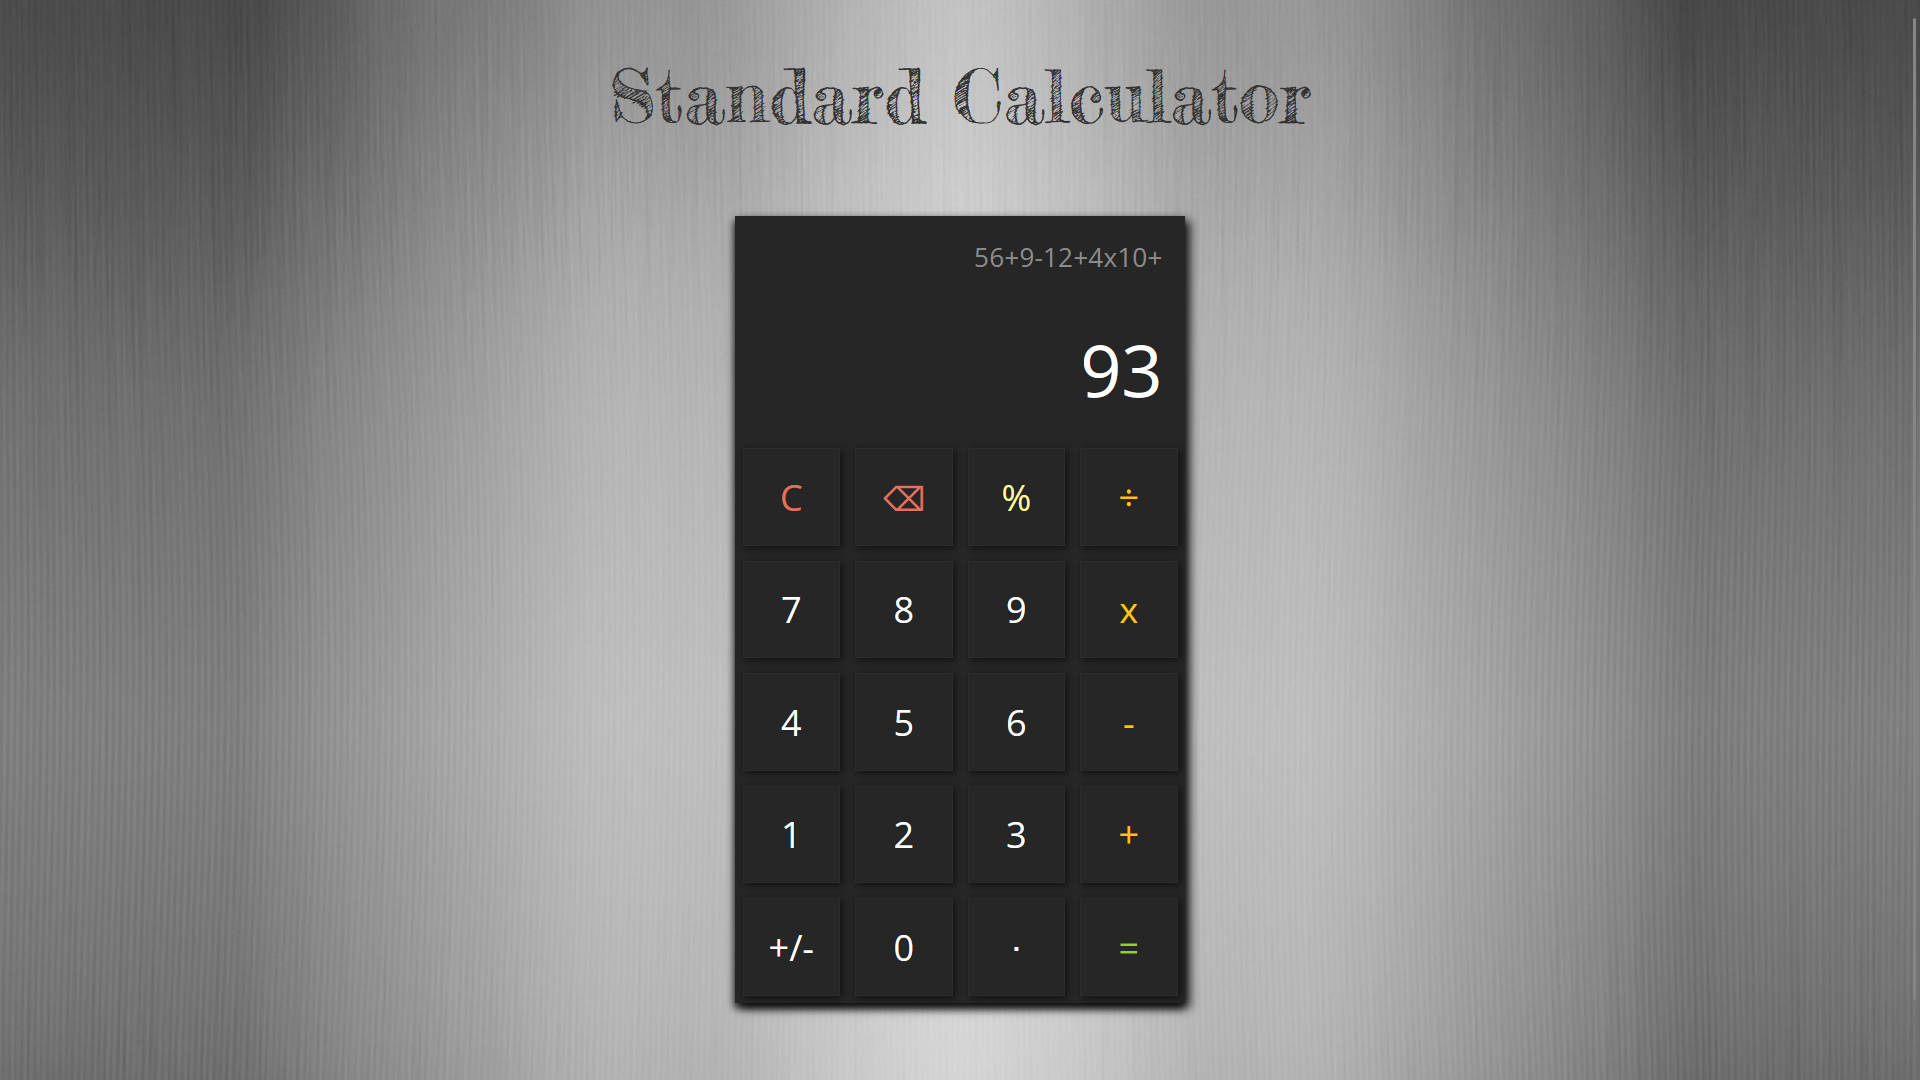 Standard Calculator project's screenshot